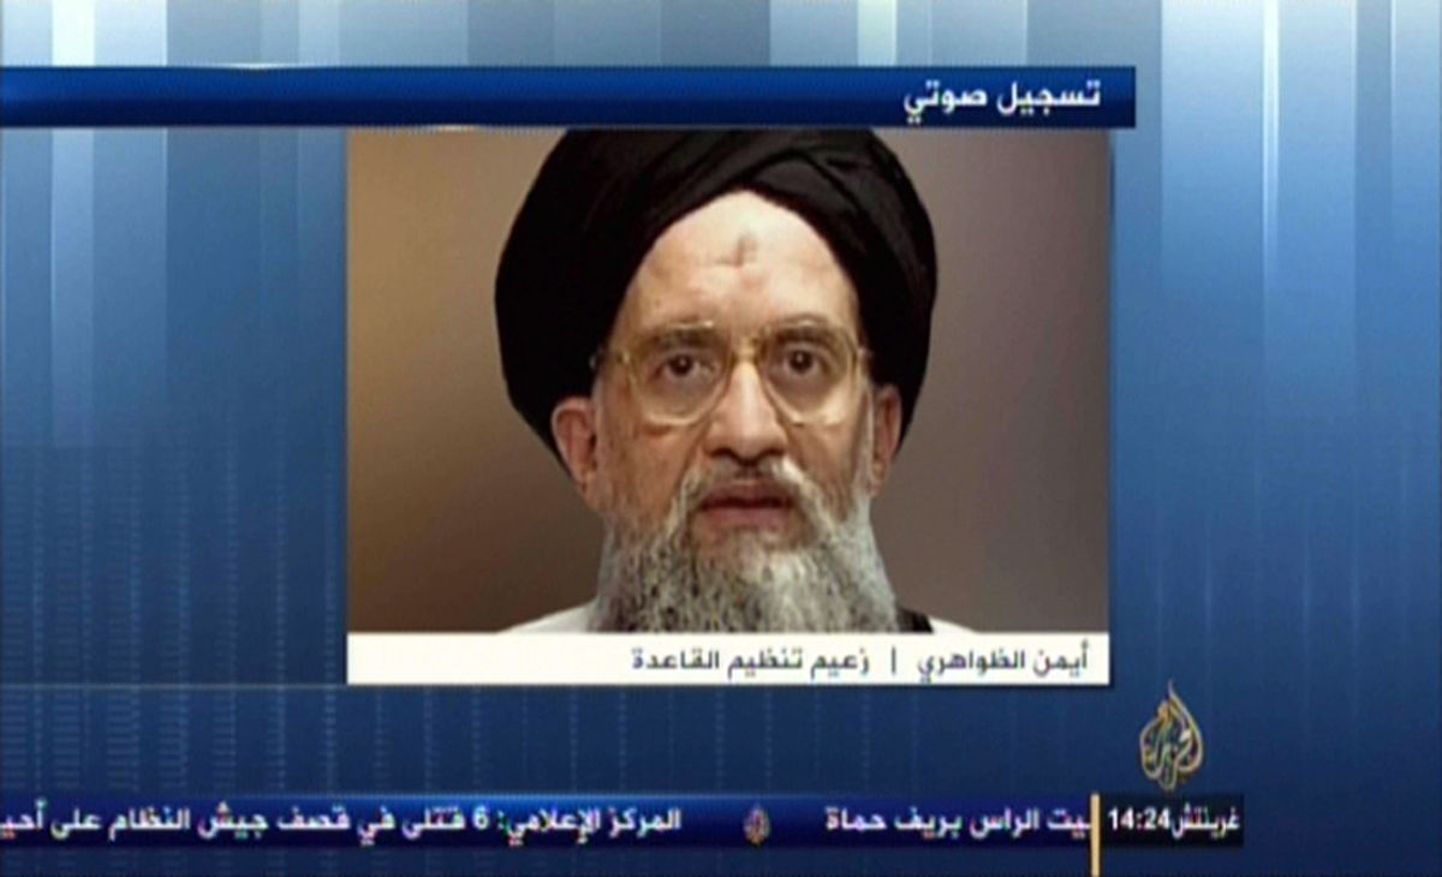 Al-Qaeda juht Ayman al-Zawahiri